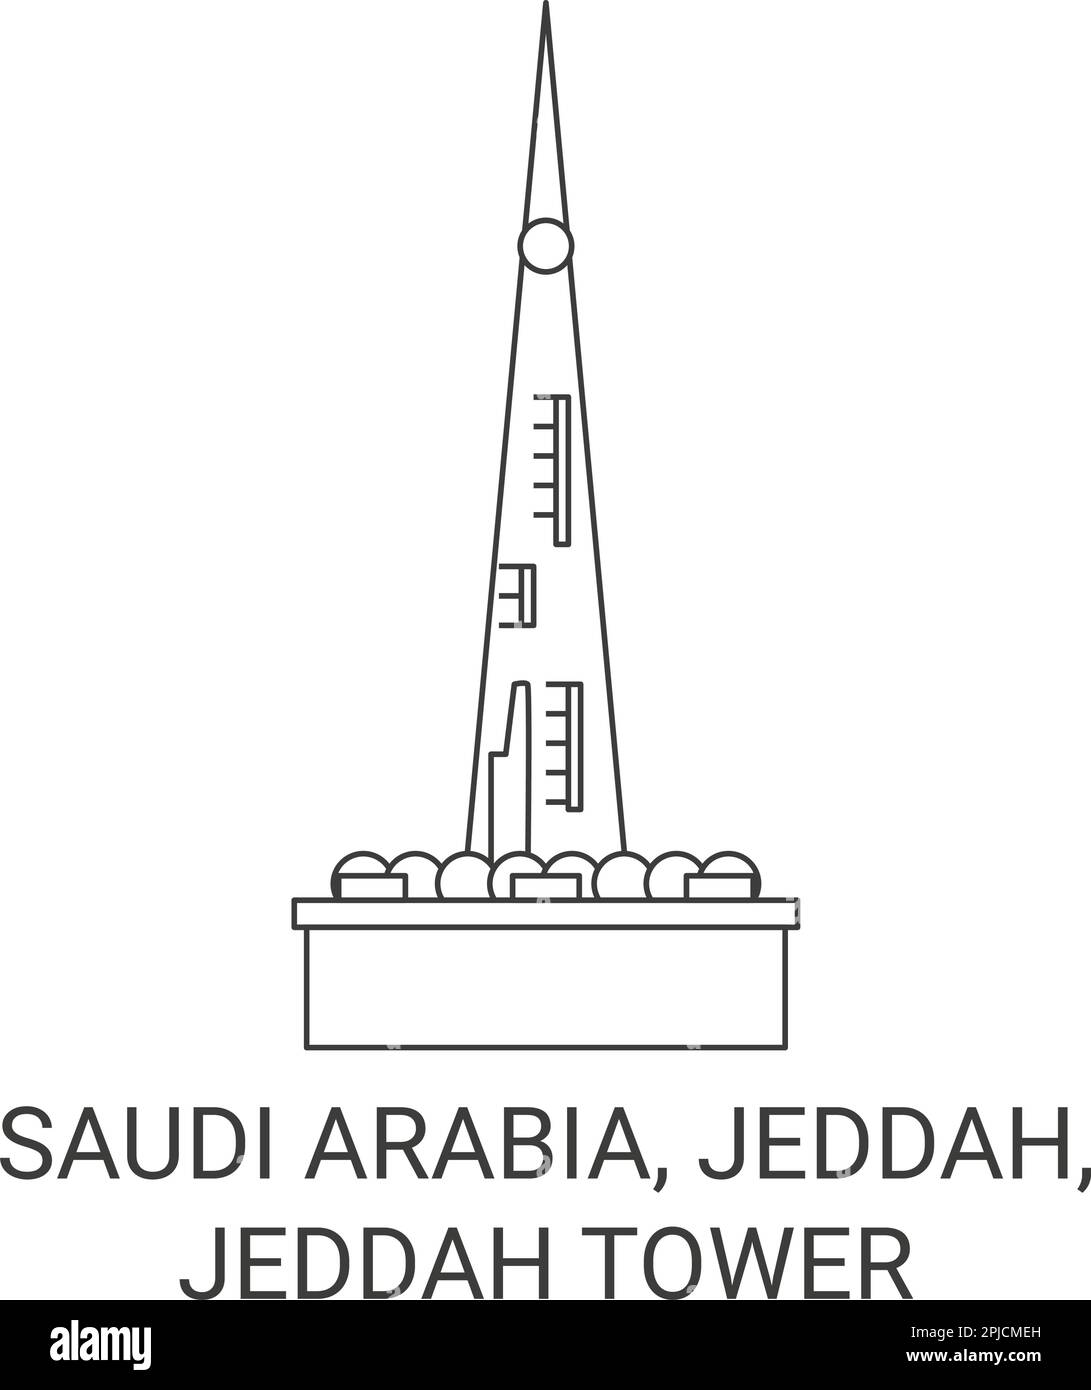 Saudi Arabia, Jeddah, Jeddah Tower travel landmark vector illustration Stock Vector